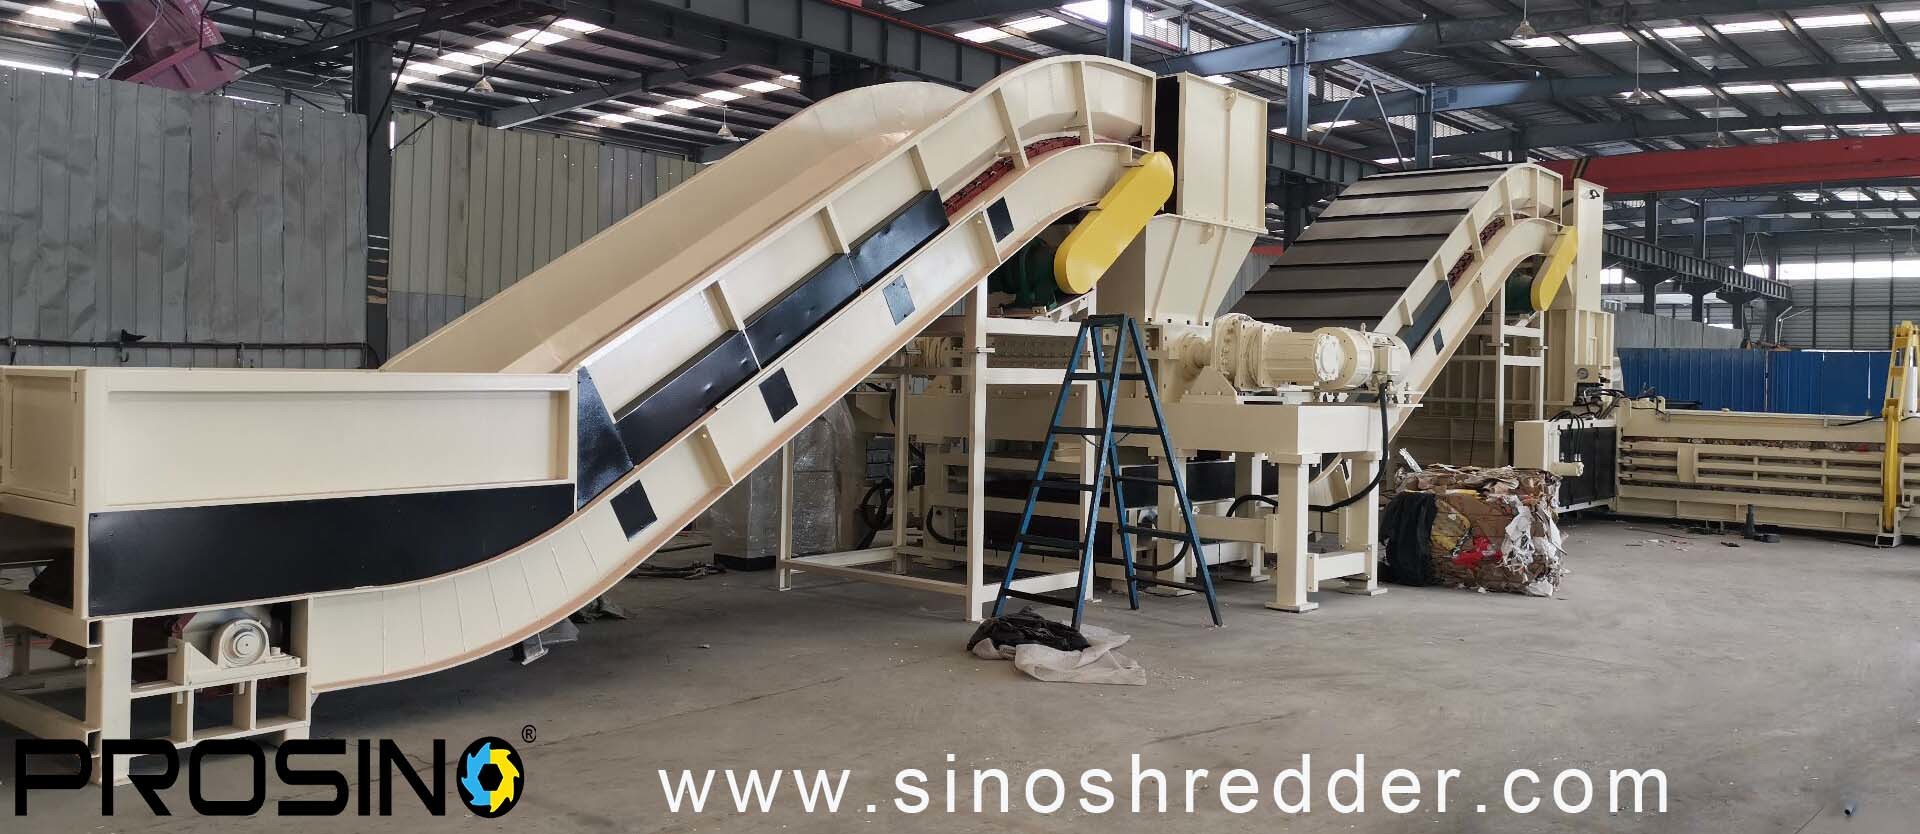 Fiberglass shredding and baling system